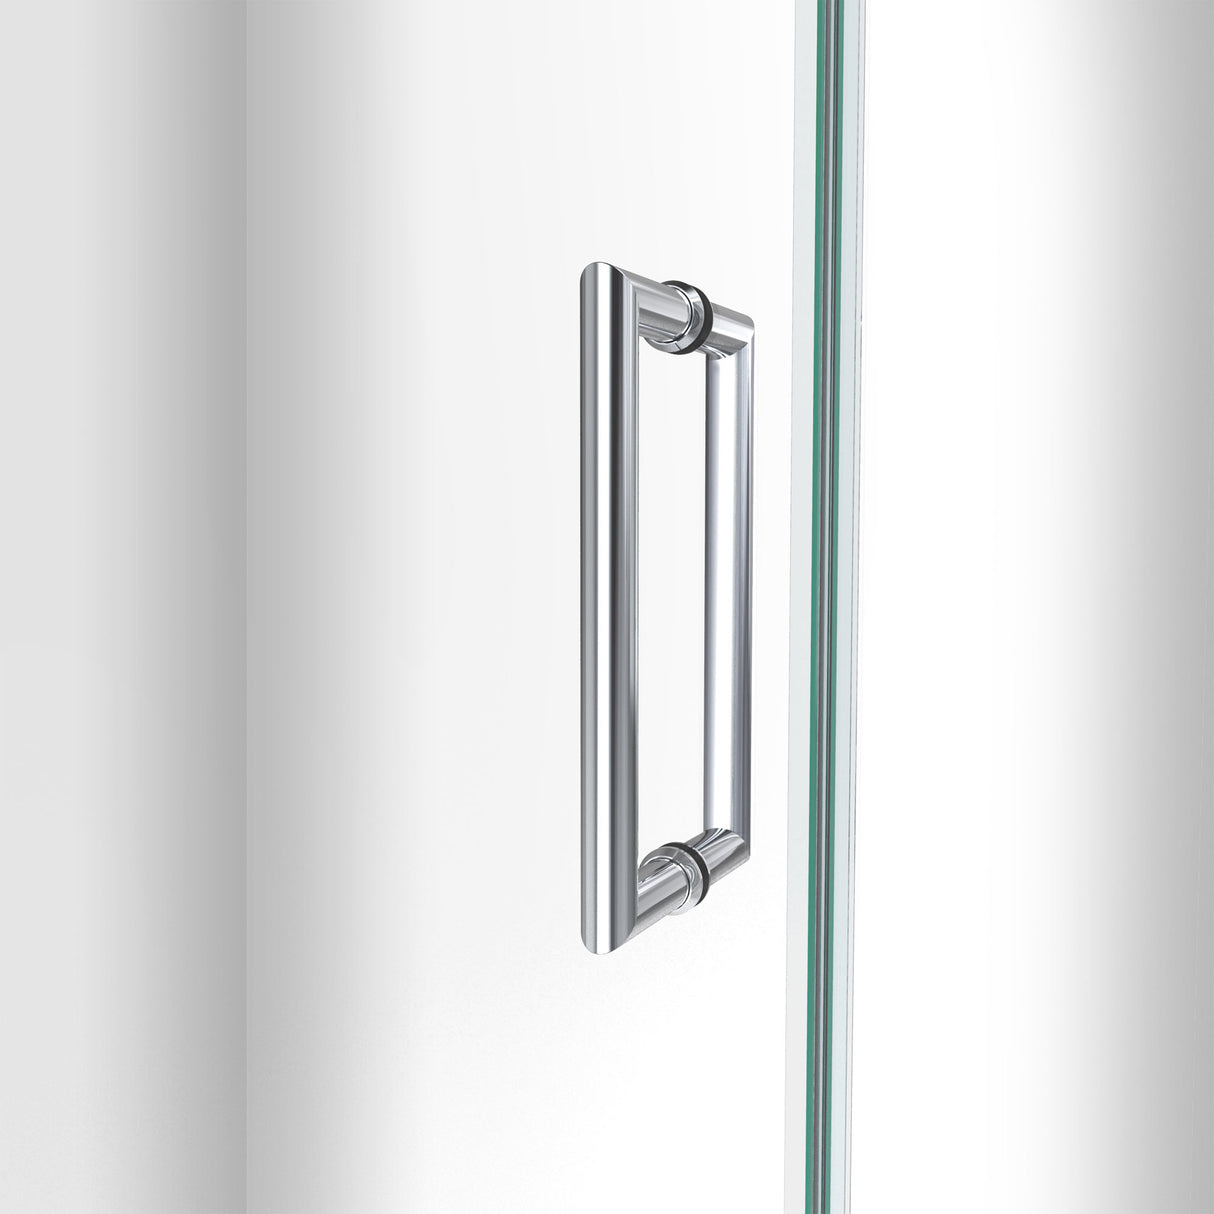 DreamLine Unidoor-LS 58-59 in. W x 72 in. H Frameless Hinged Shower Door with L-Bar in Chrome